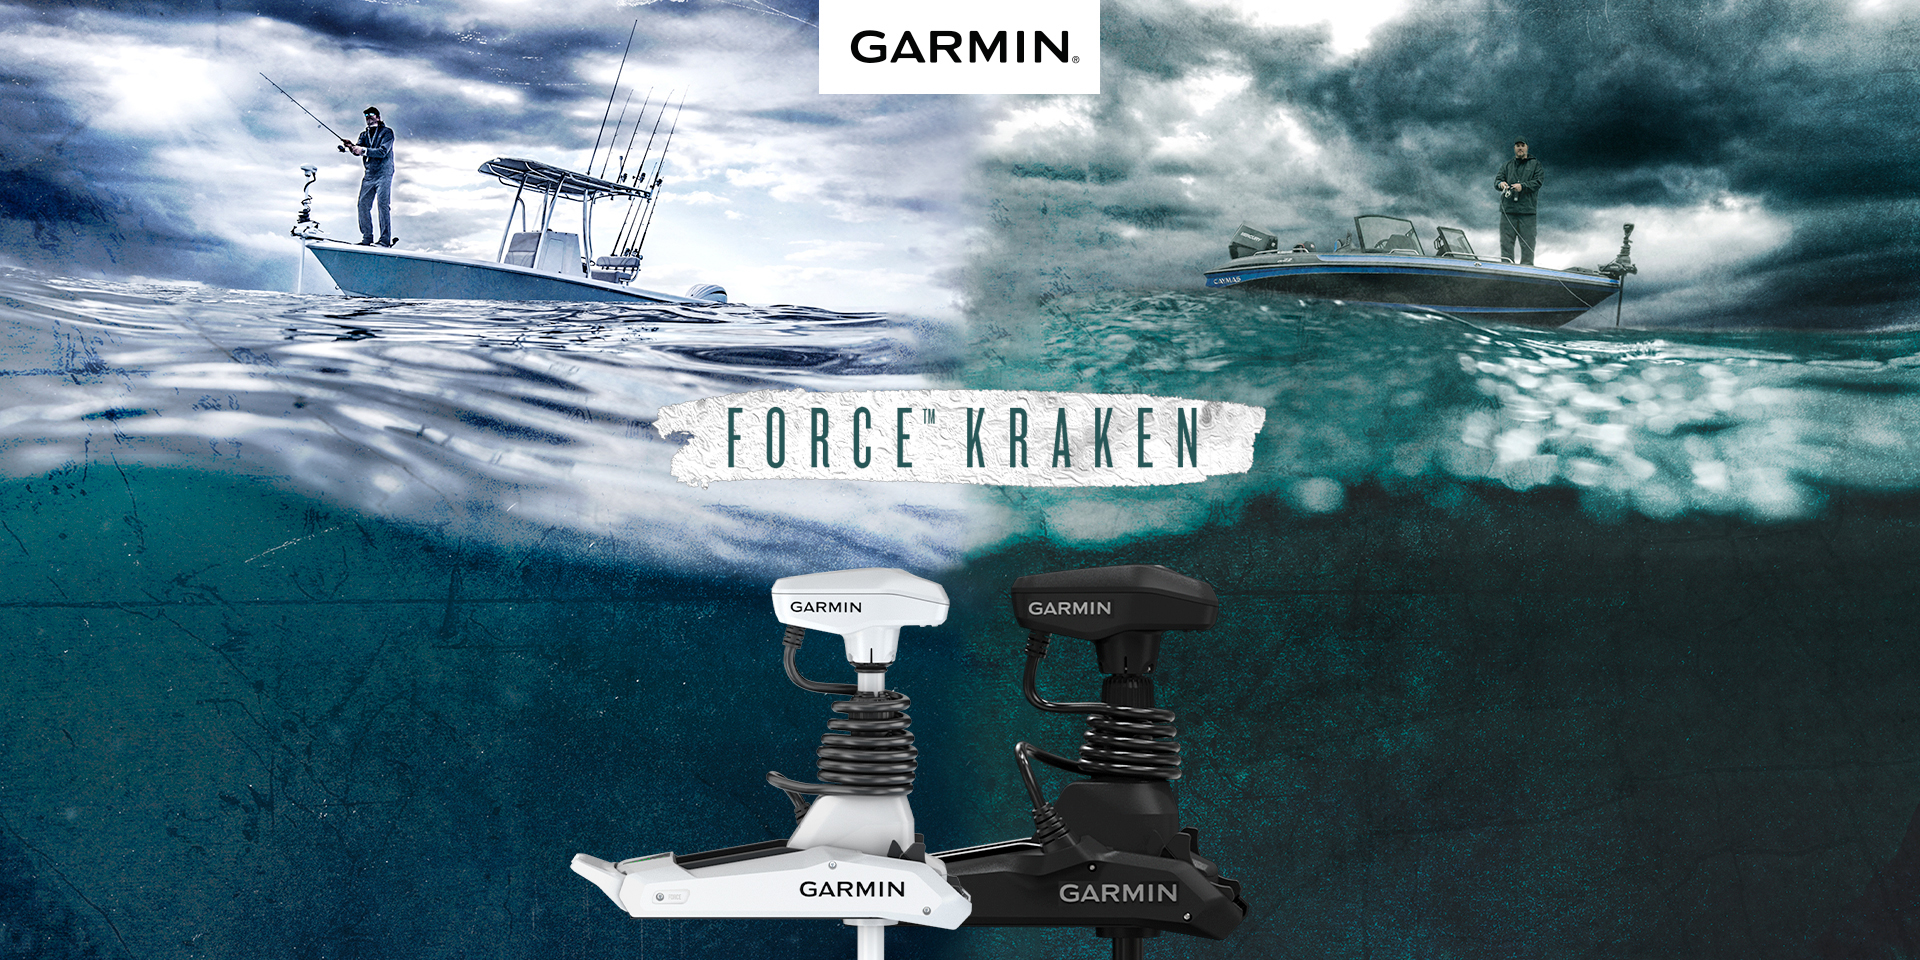 Garmin unveils Force Kraken, expands its award-winning trolling